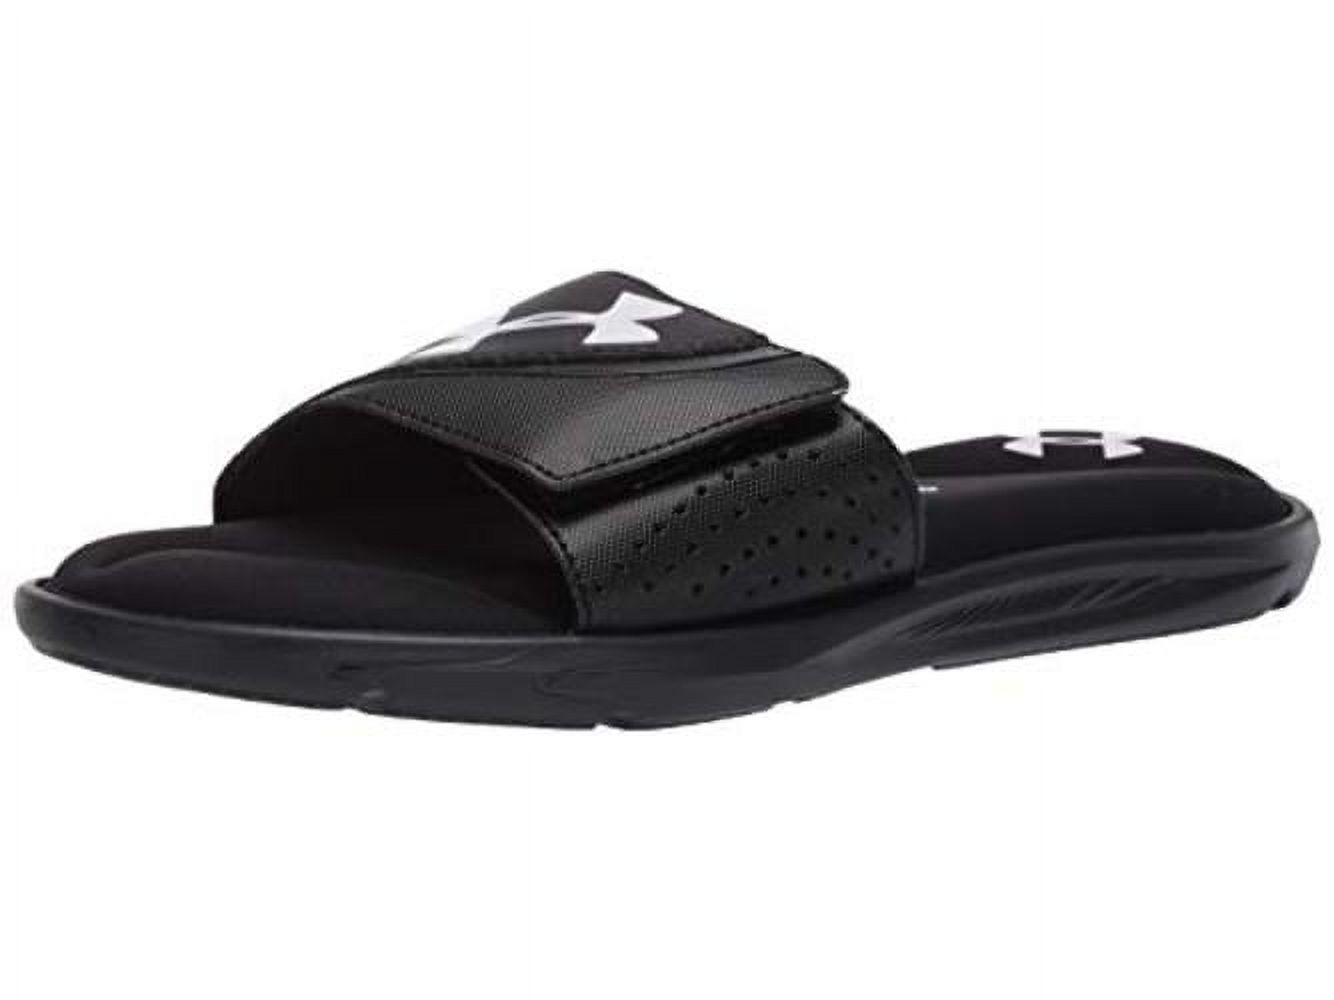 Under Armour Men's UA Ignite VI Slides Athletic Sandals Flip Flop Foam 3022711, Black/Black, 8 - image 1 of 3